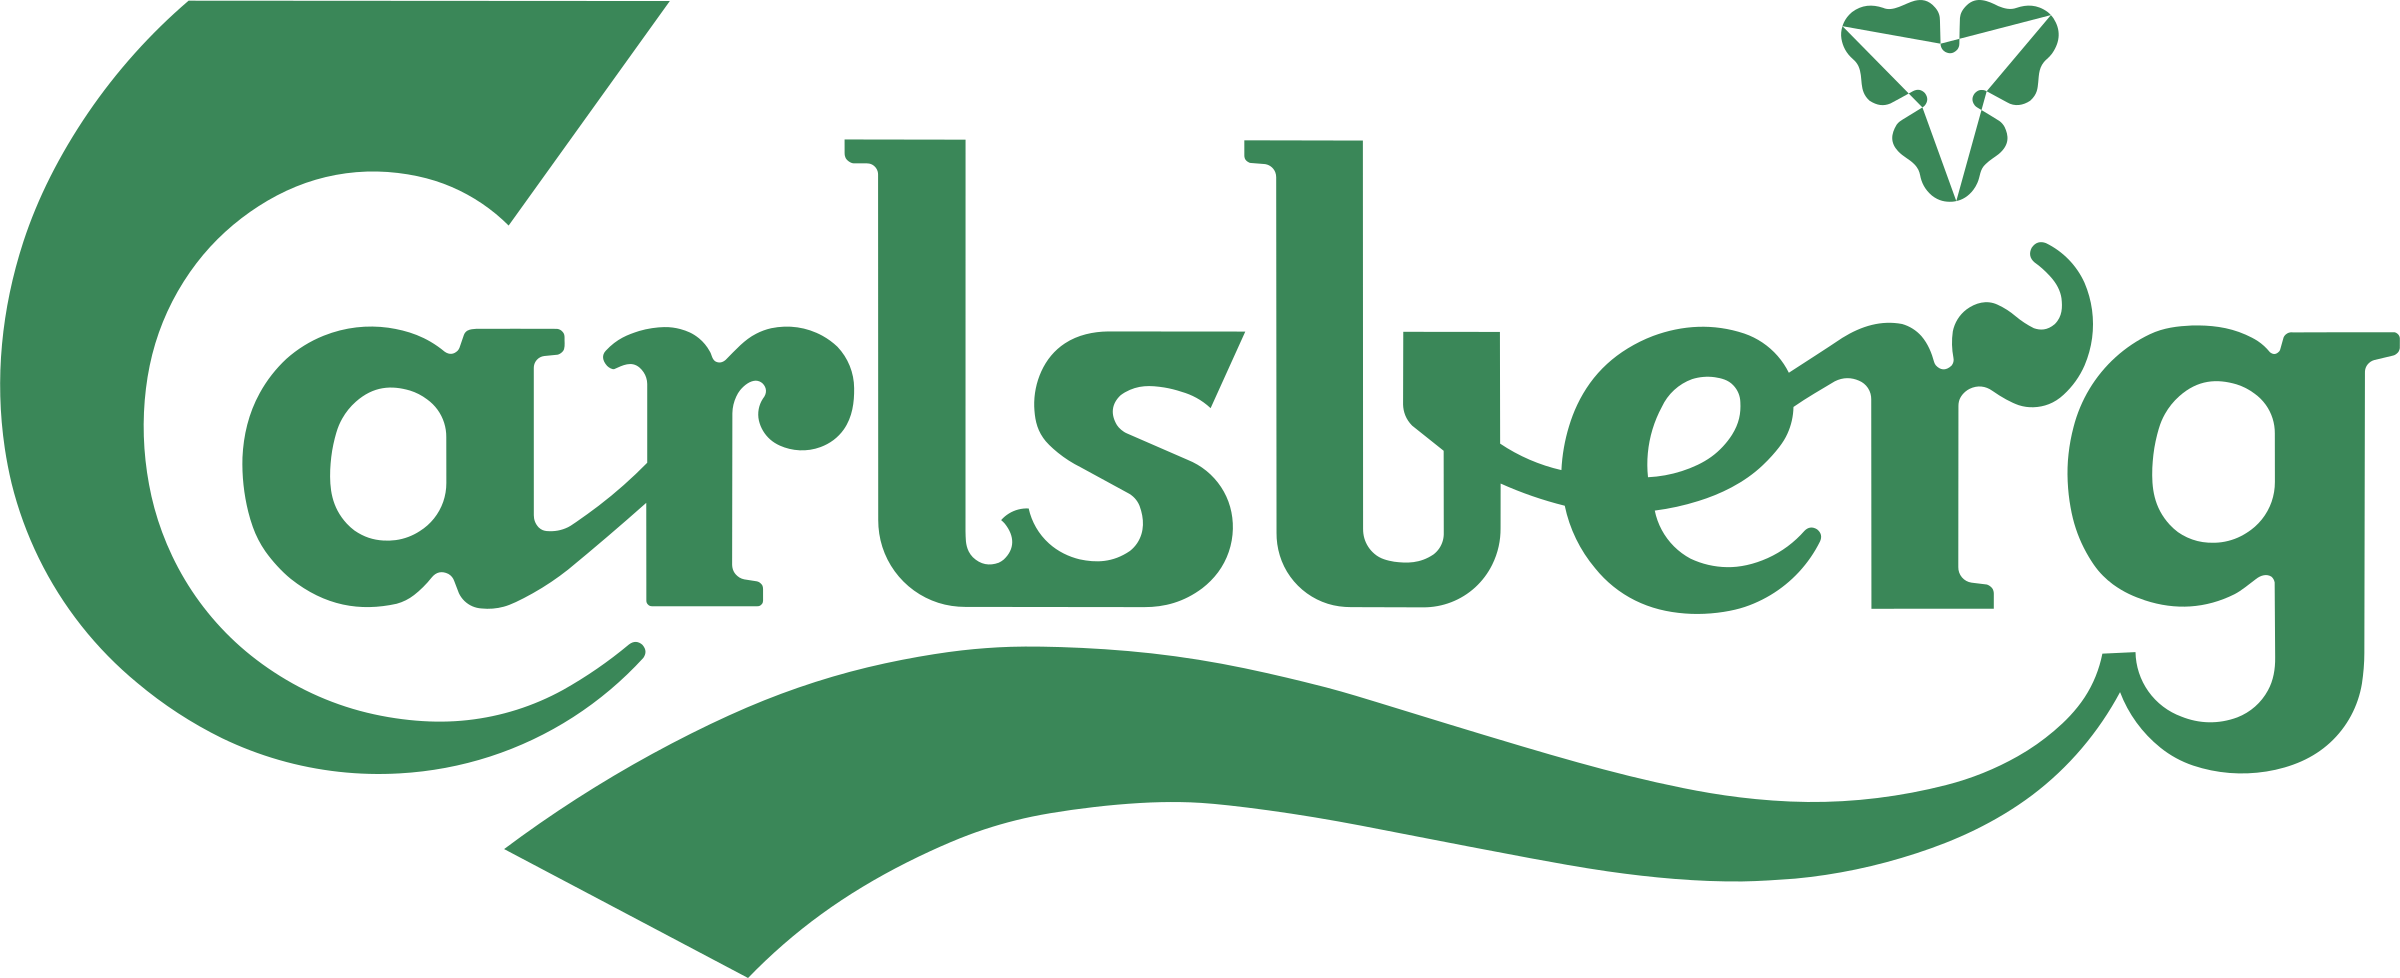 Carlsberg Logo PNG - 176962